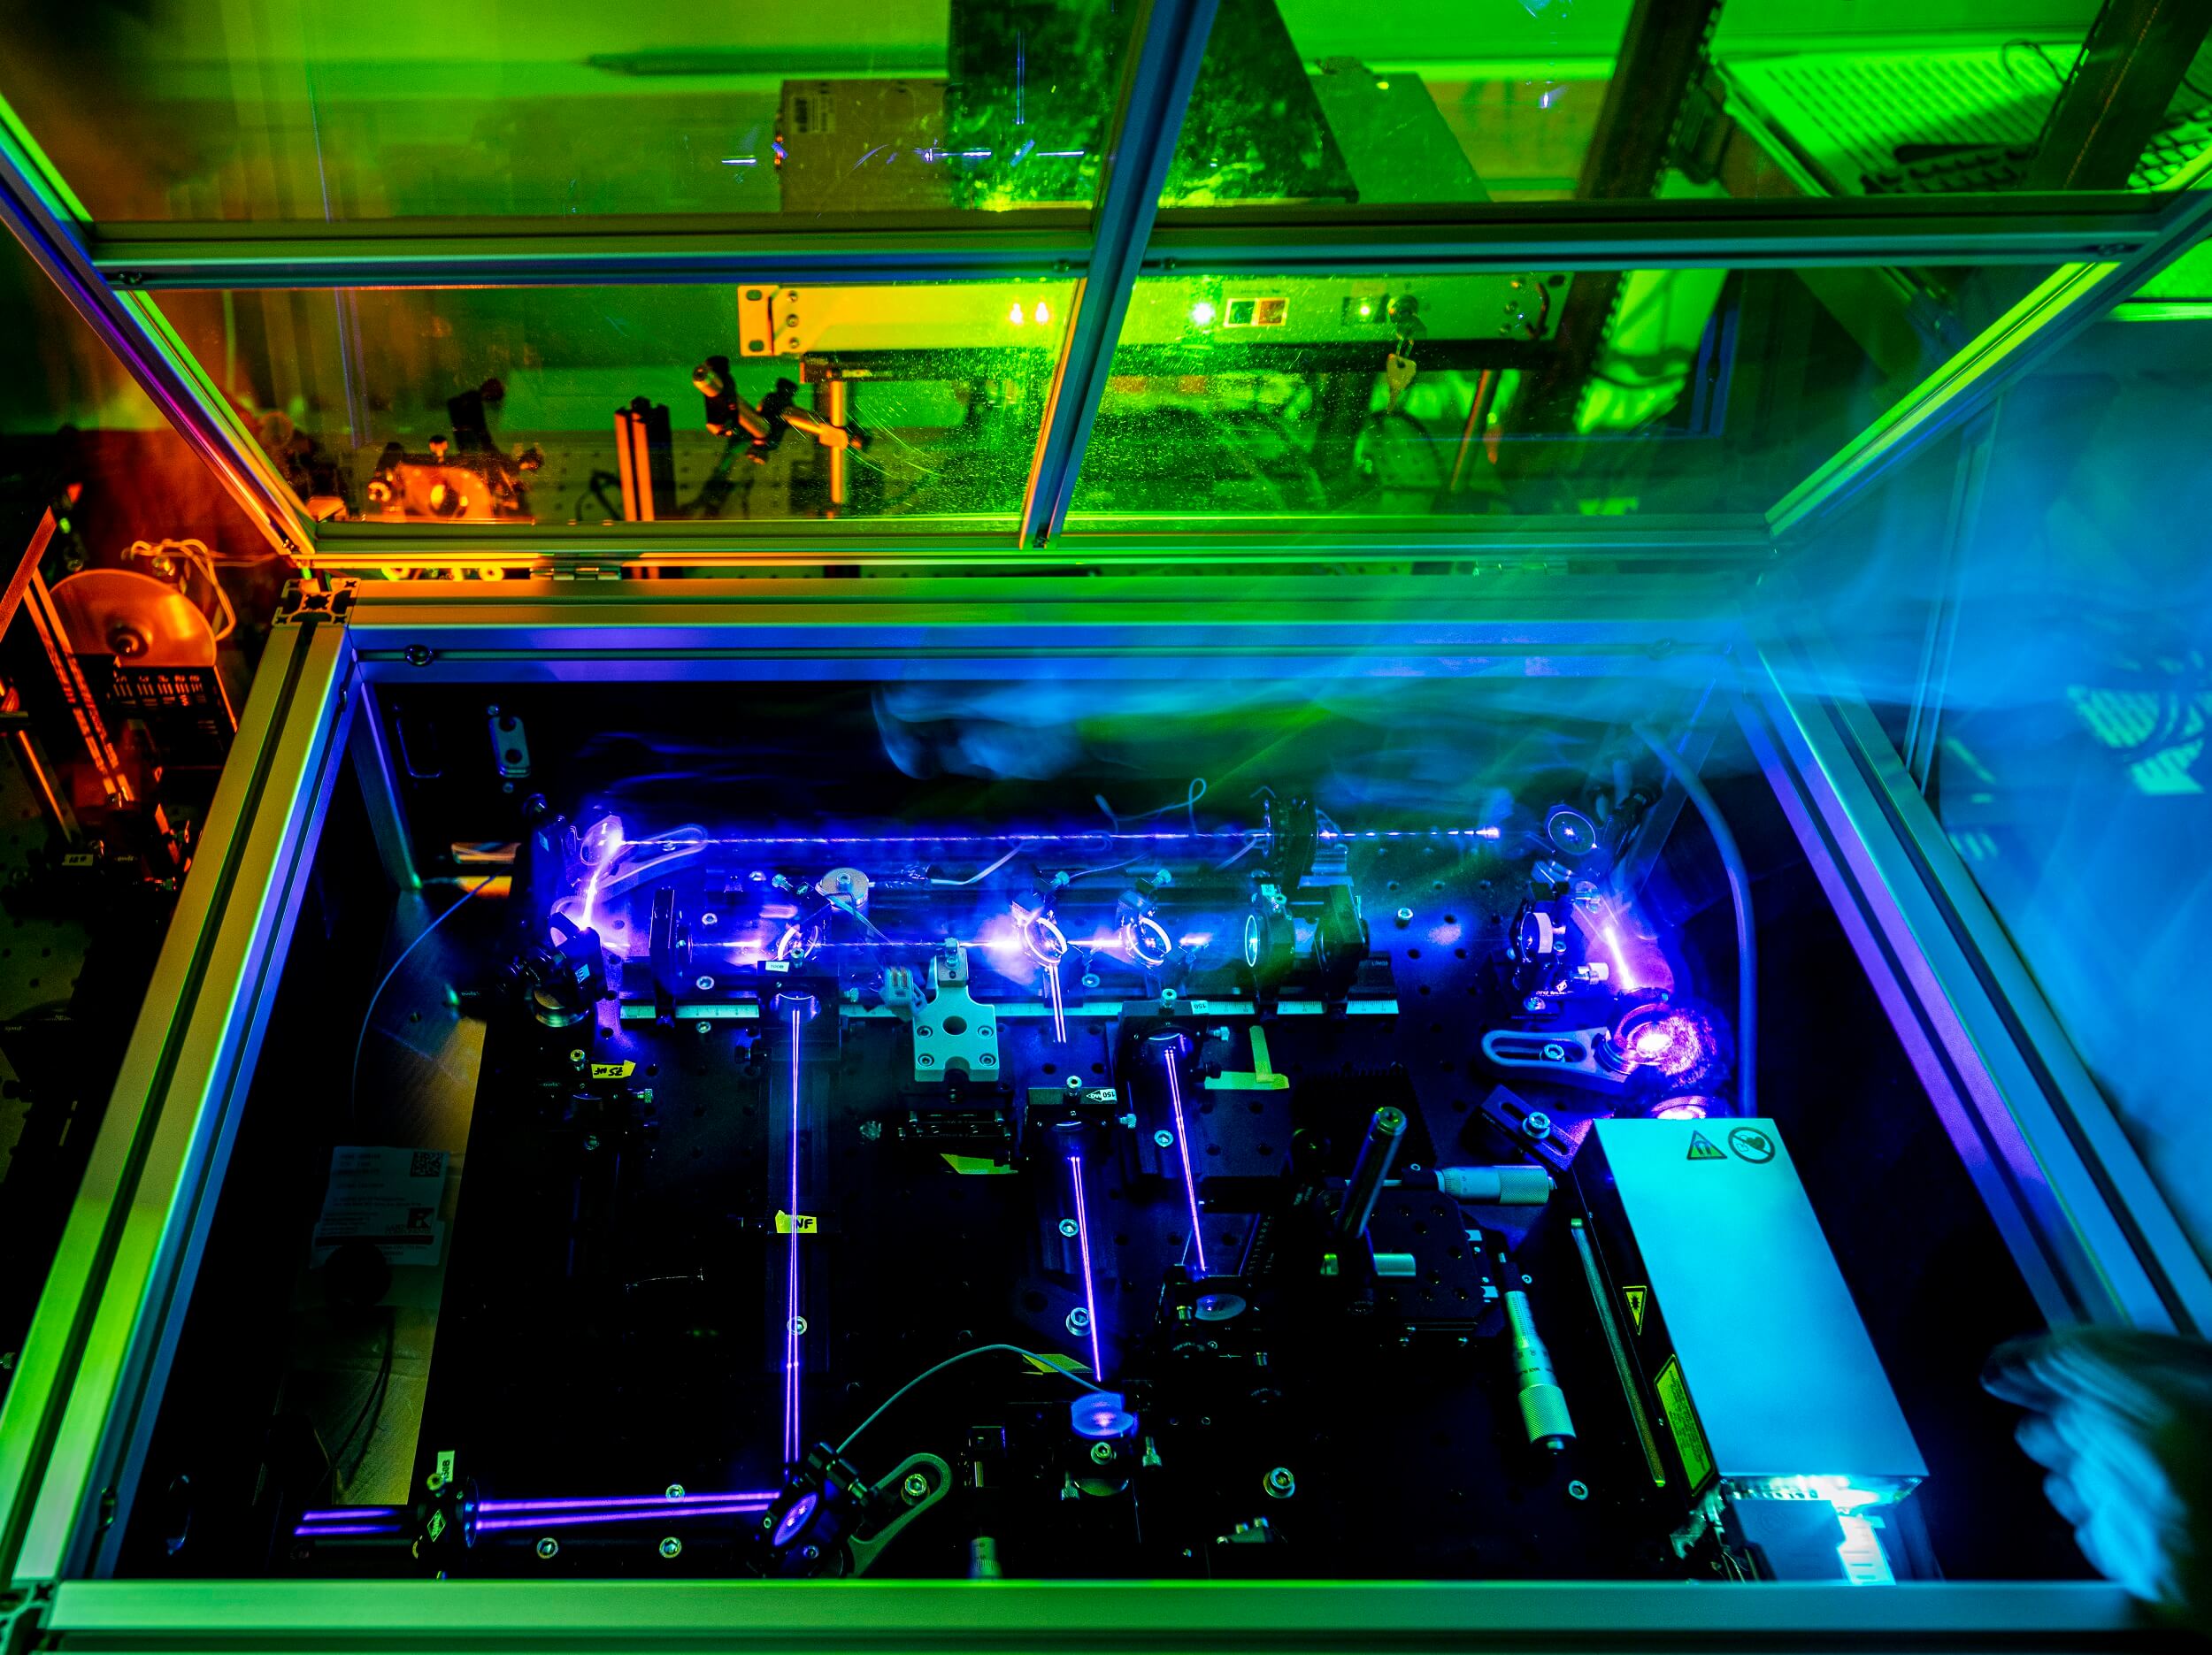 Nichtlineares Interferometer im experimentellen Aufbau zur Quantenbildgebung.